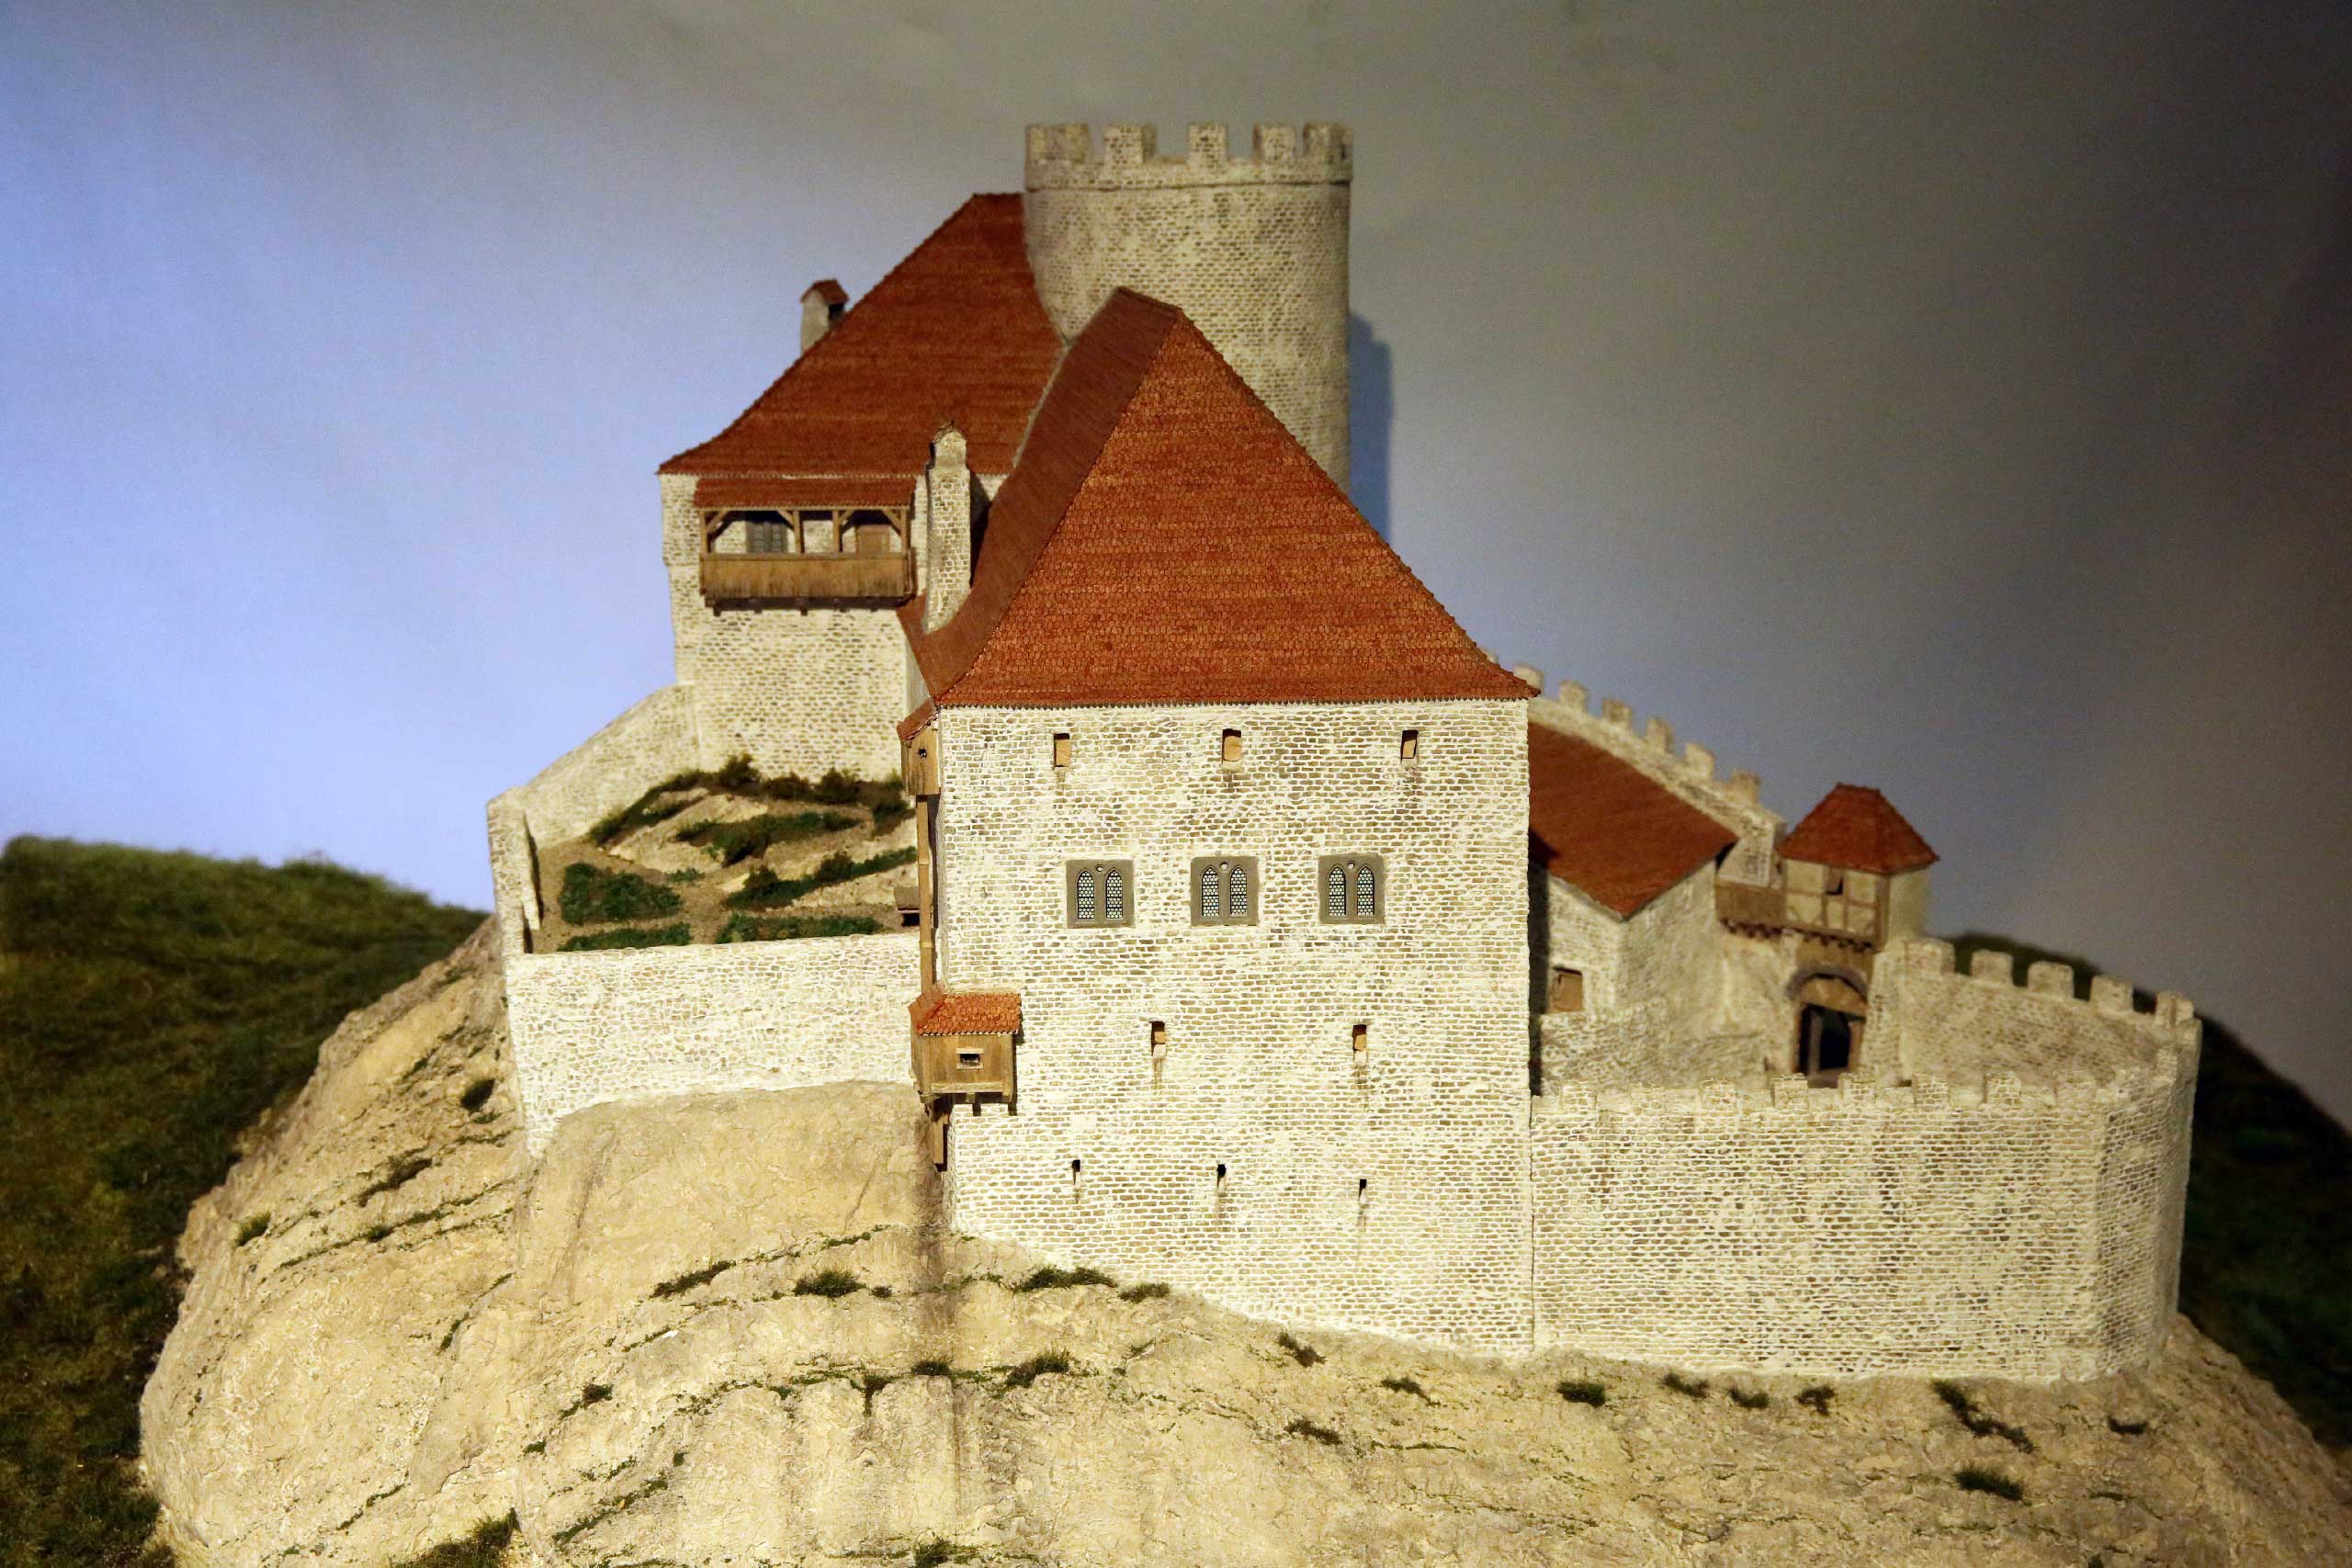 dorfmuseum-wilderwil-modell-ruine-unspunnen